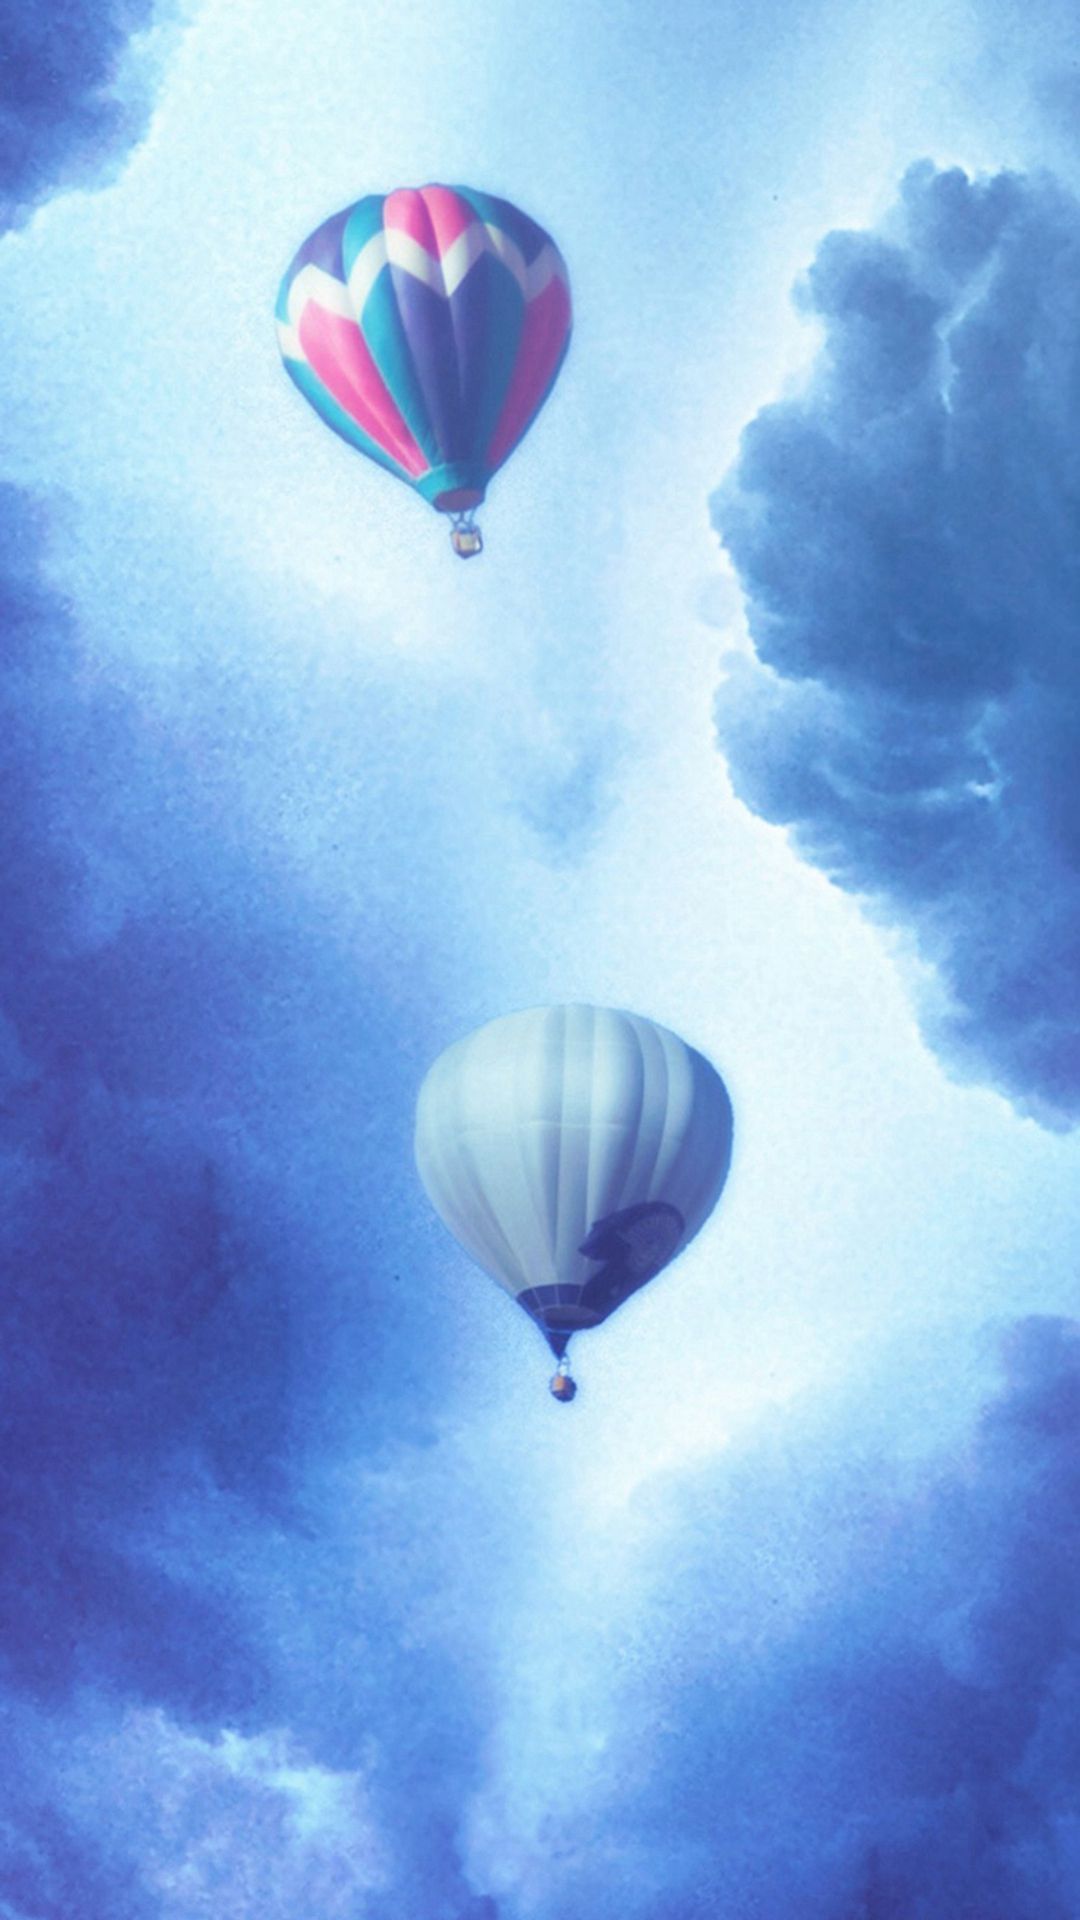 hot iphone wallpaper,hot air ballooning,hot air balloon,sky,nature,cloud